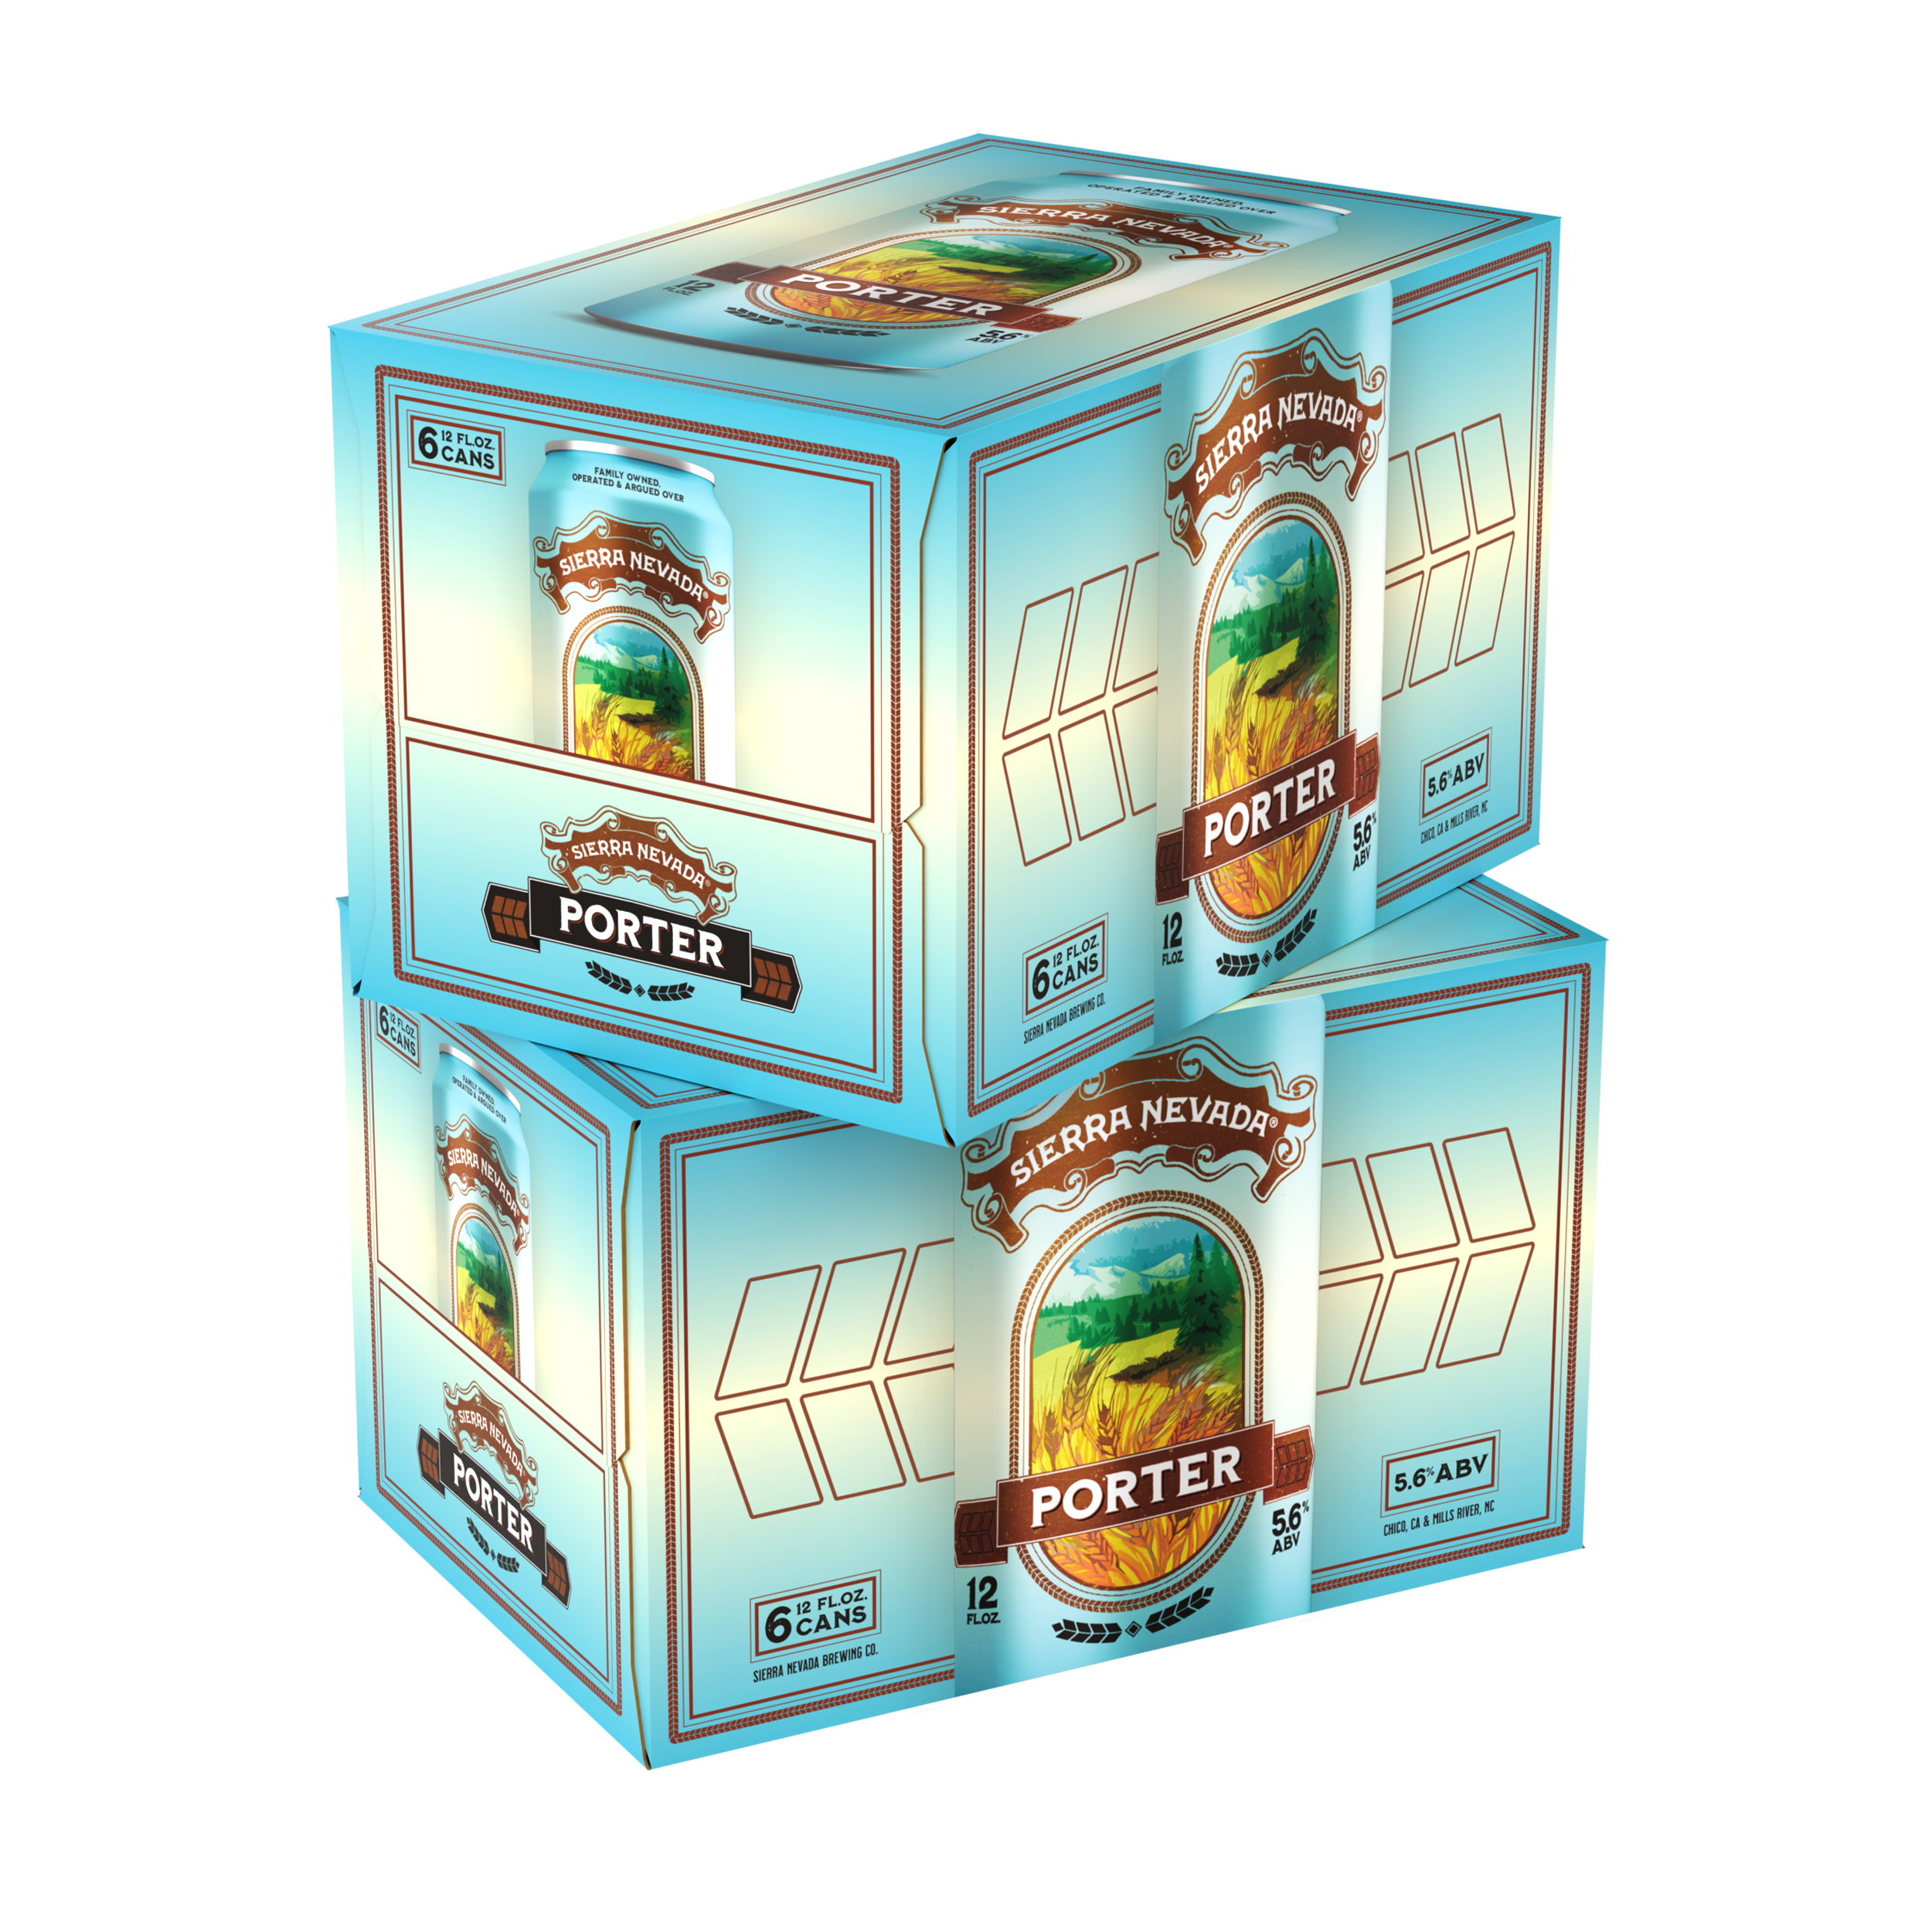 Sierra Nevada Porter 12-pack 12-ounce cans